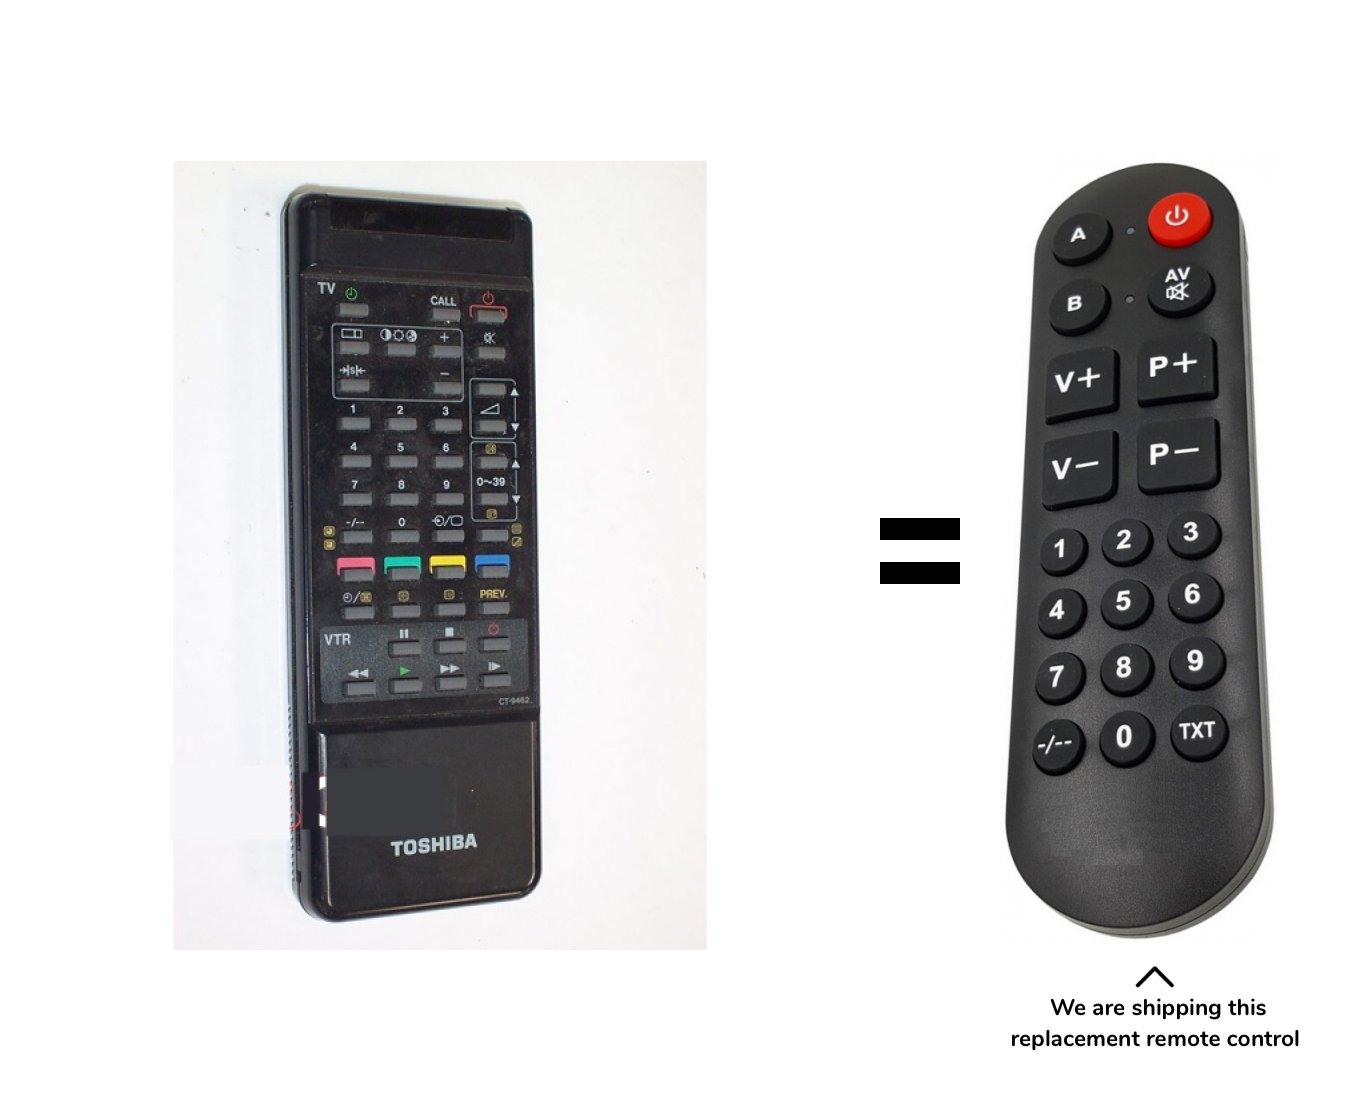 Toshiba 219T remote control for seniors